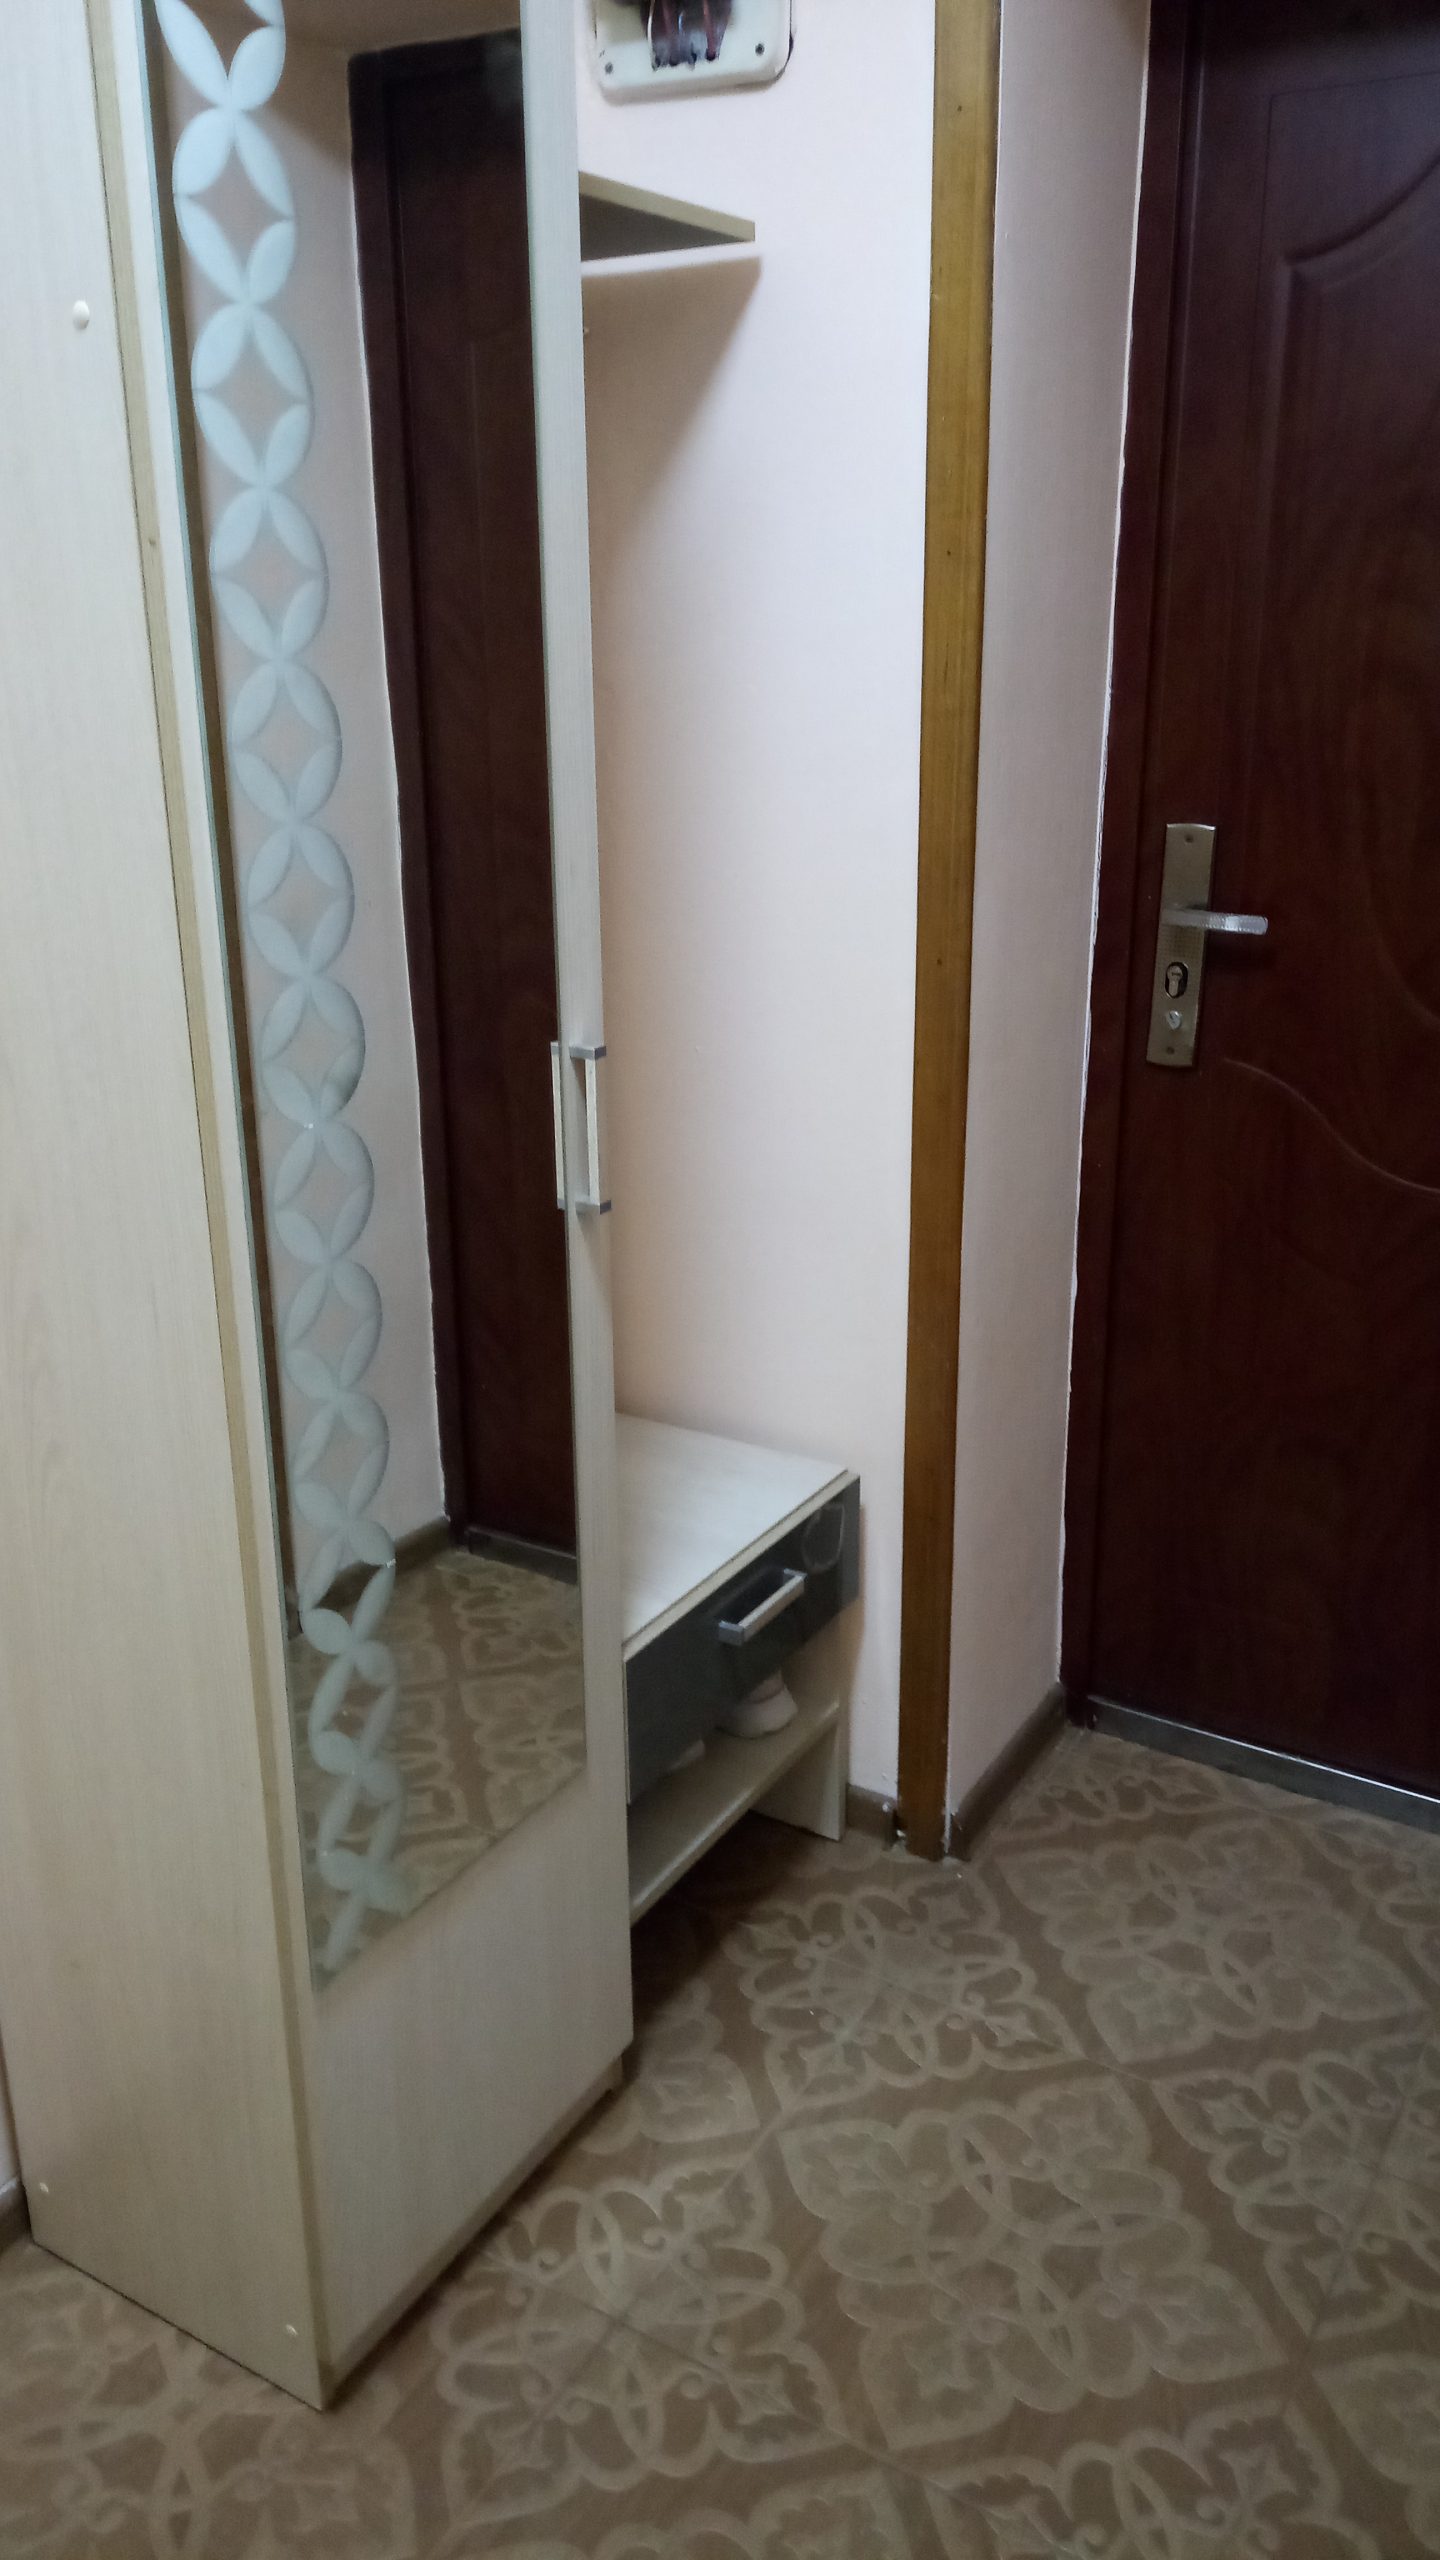 Двухкомнатная квартира на ул.Войкова 33 (55кв.м) до 4 гостей